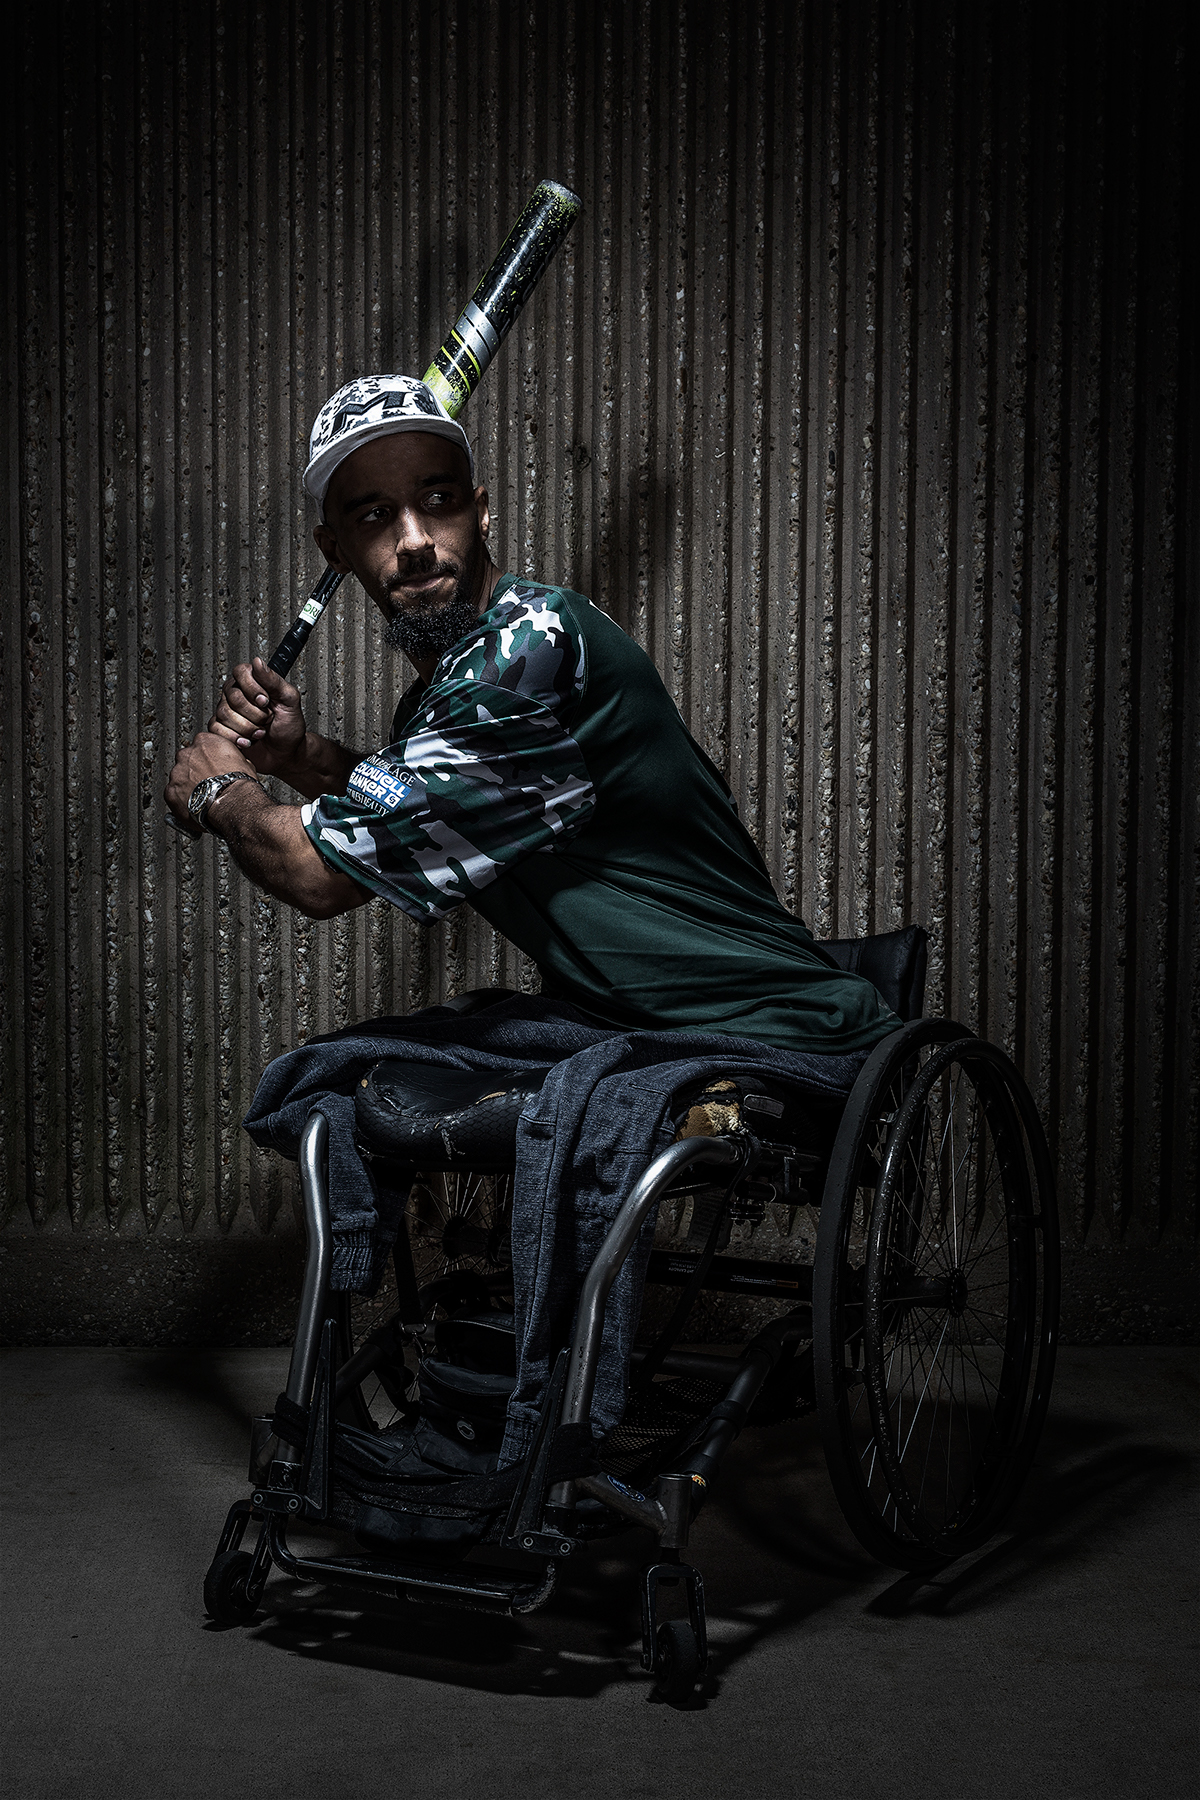 softball portraits awesome cool Fun athletes disablility wheelchair gritty dark